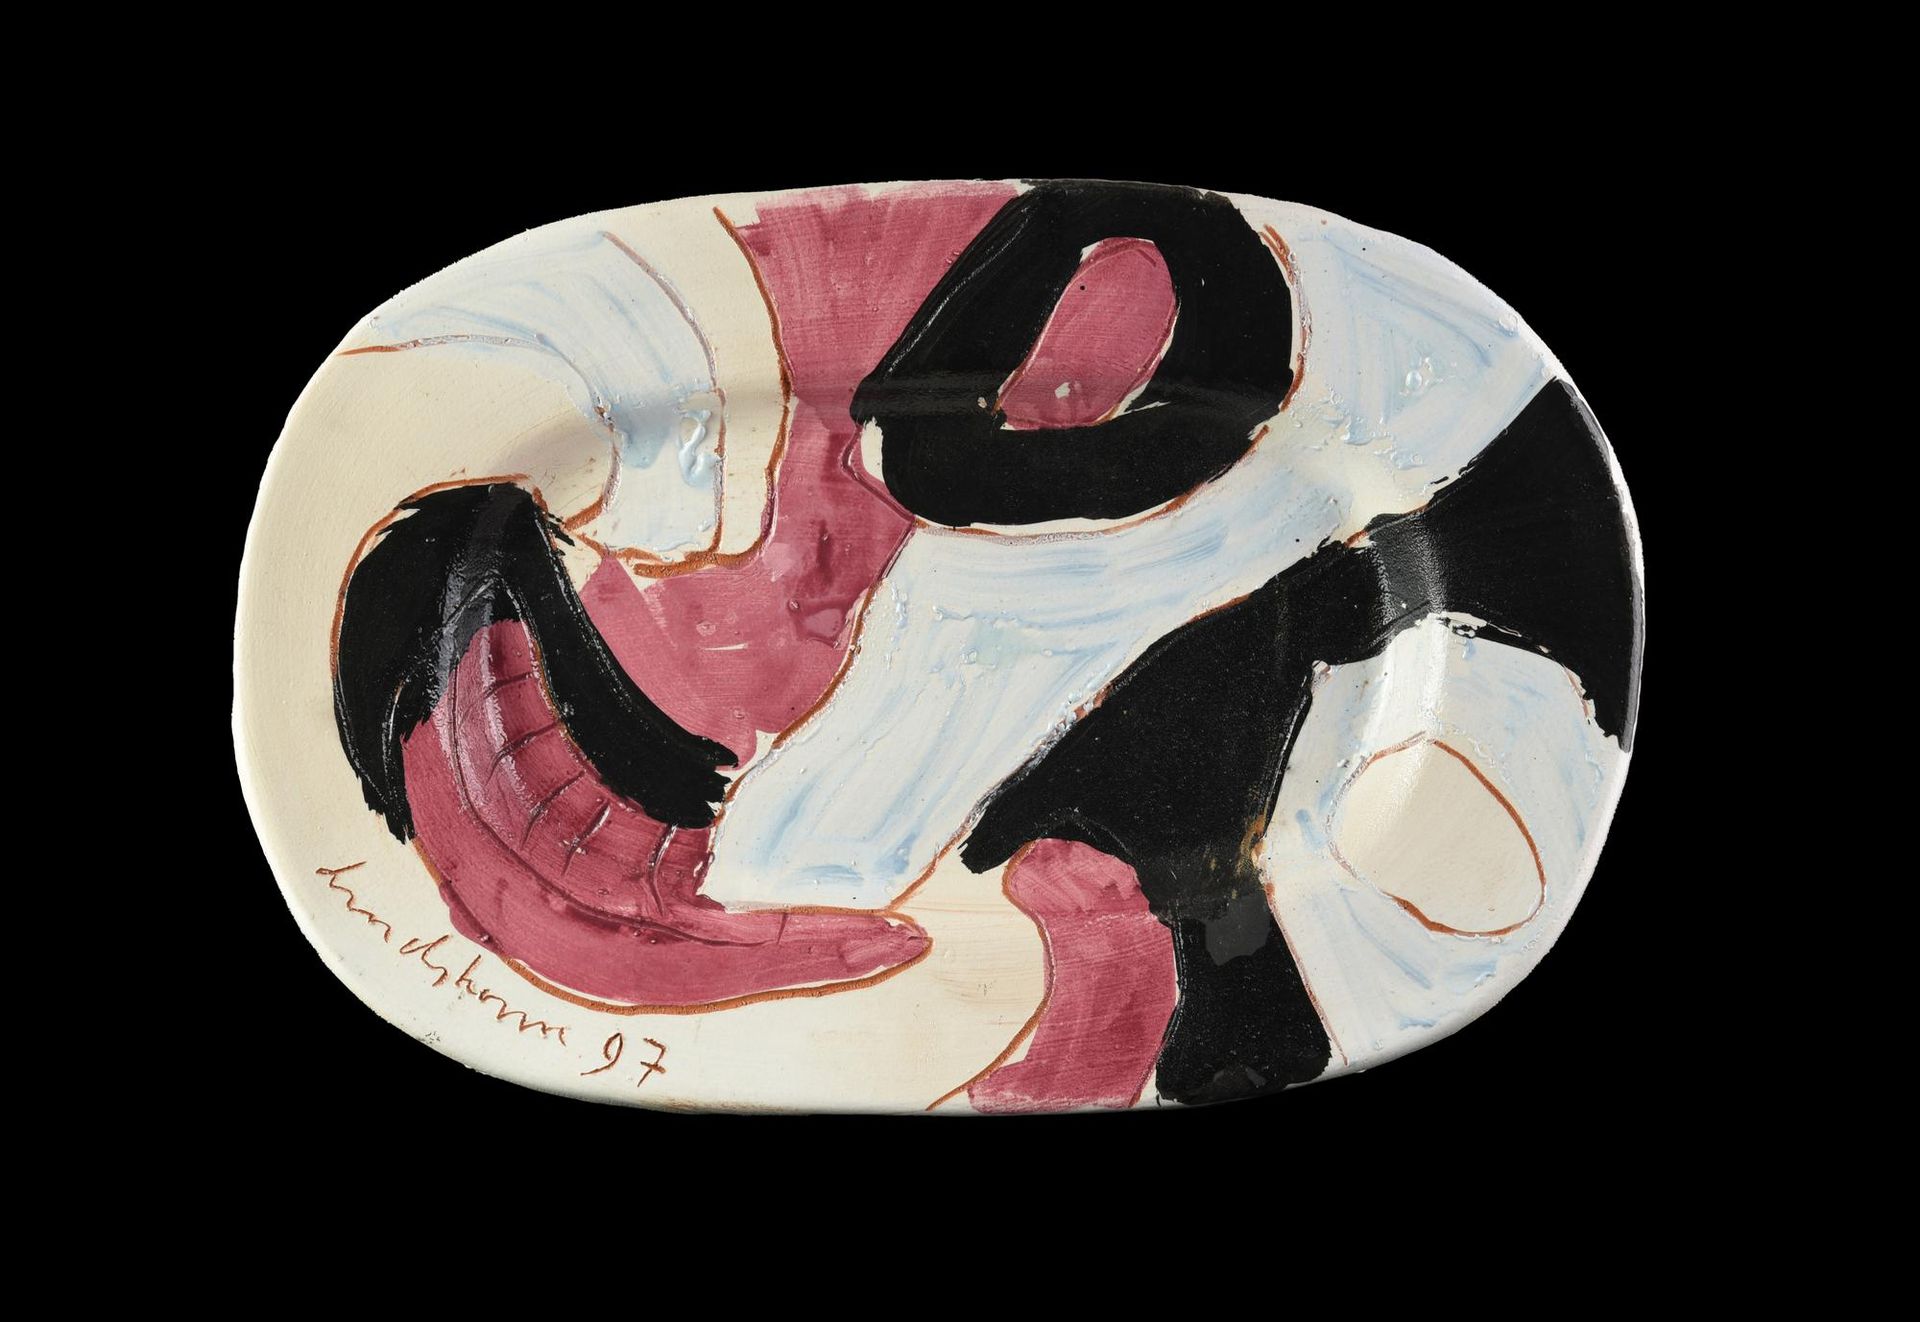 Bengt Lindstrom Bengt Lindstrom

PLATE

ceramic, 5x53x35 cm 

signature and date&hellip;